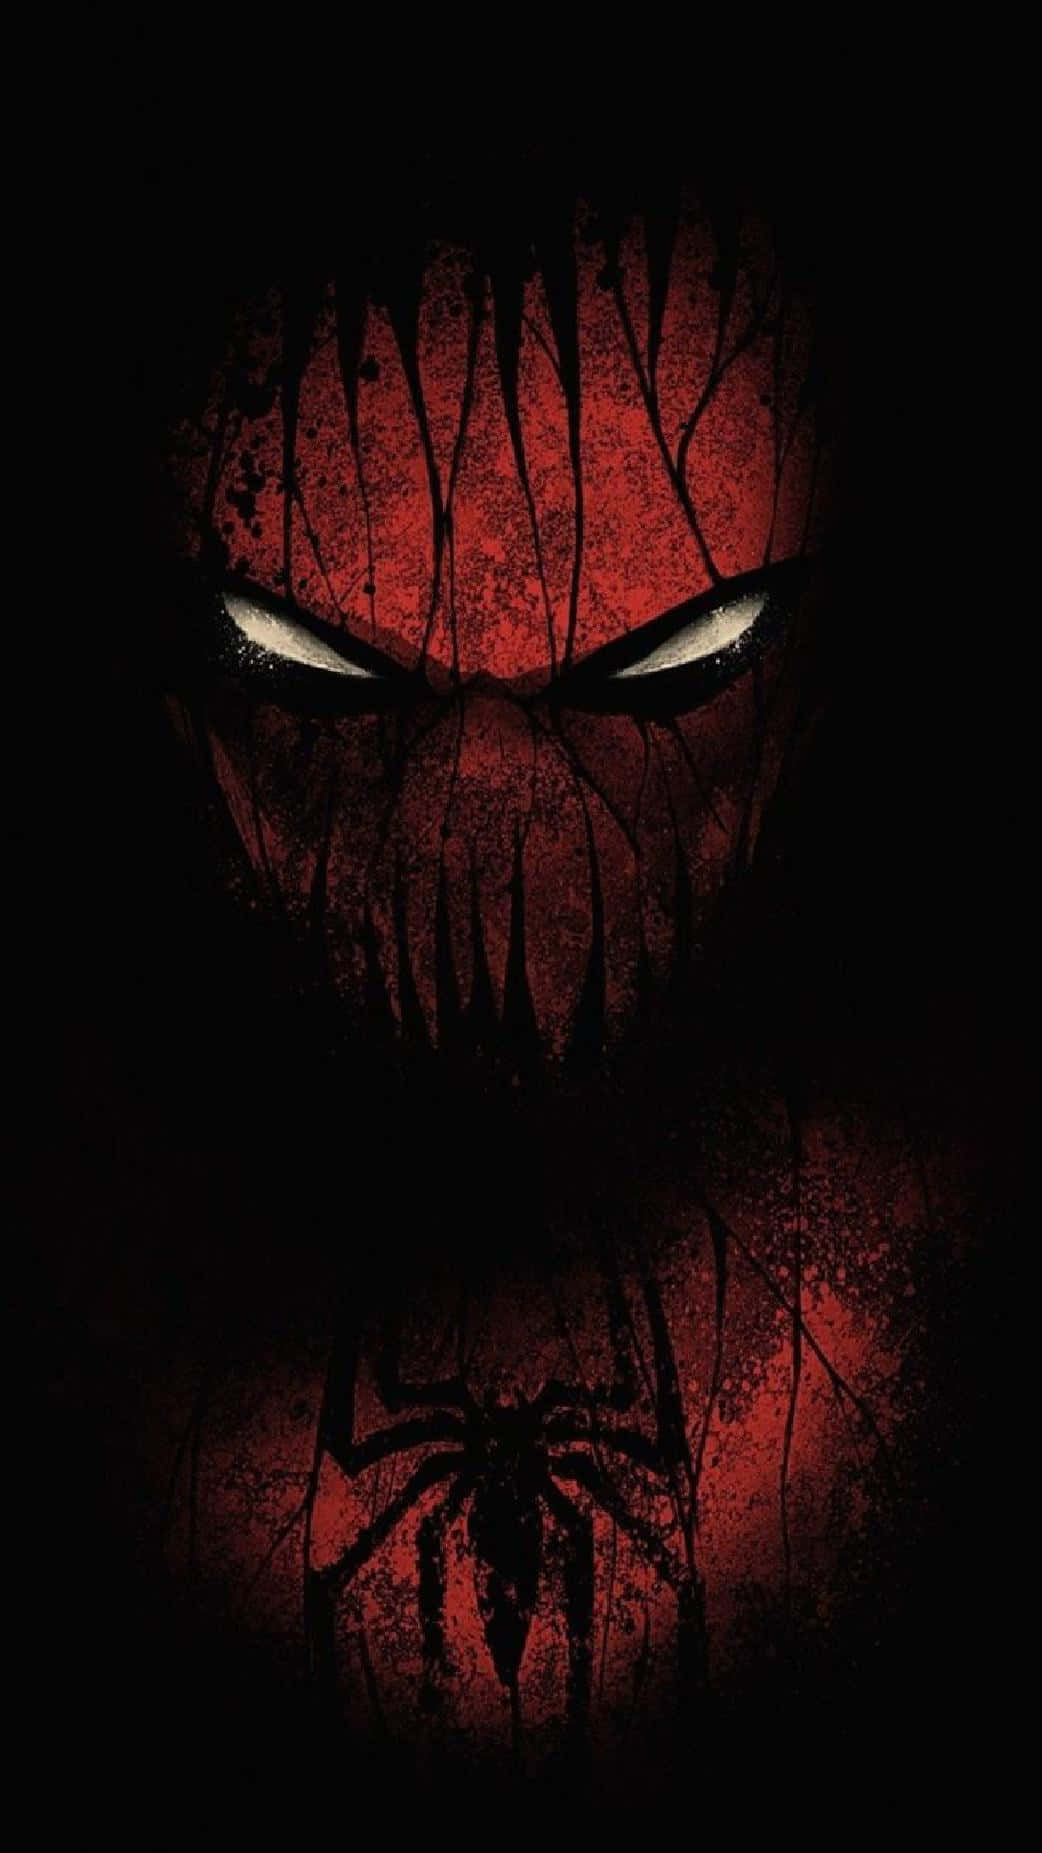 "The Best Spider-Man Always Raises the Bar" Wallpaper